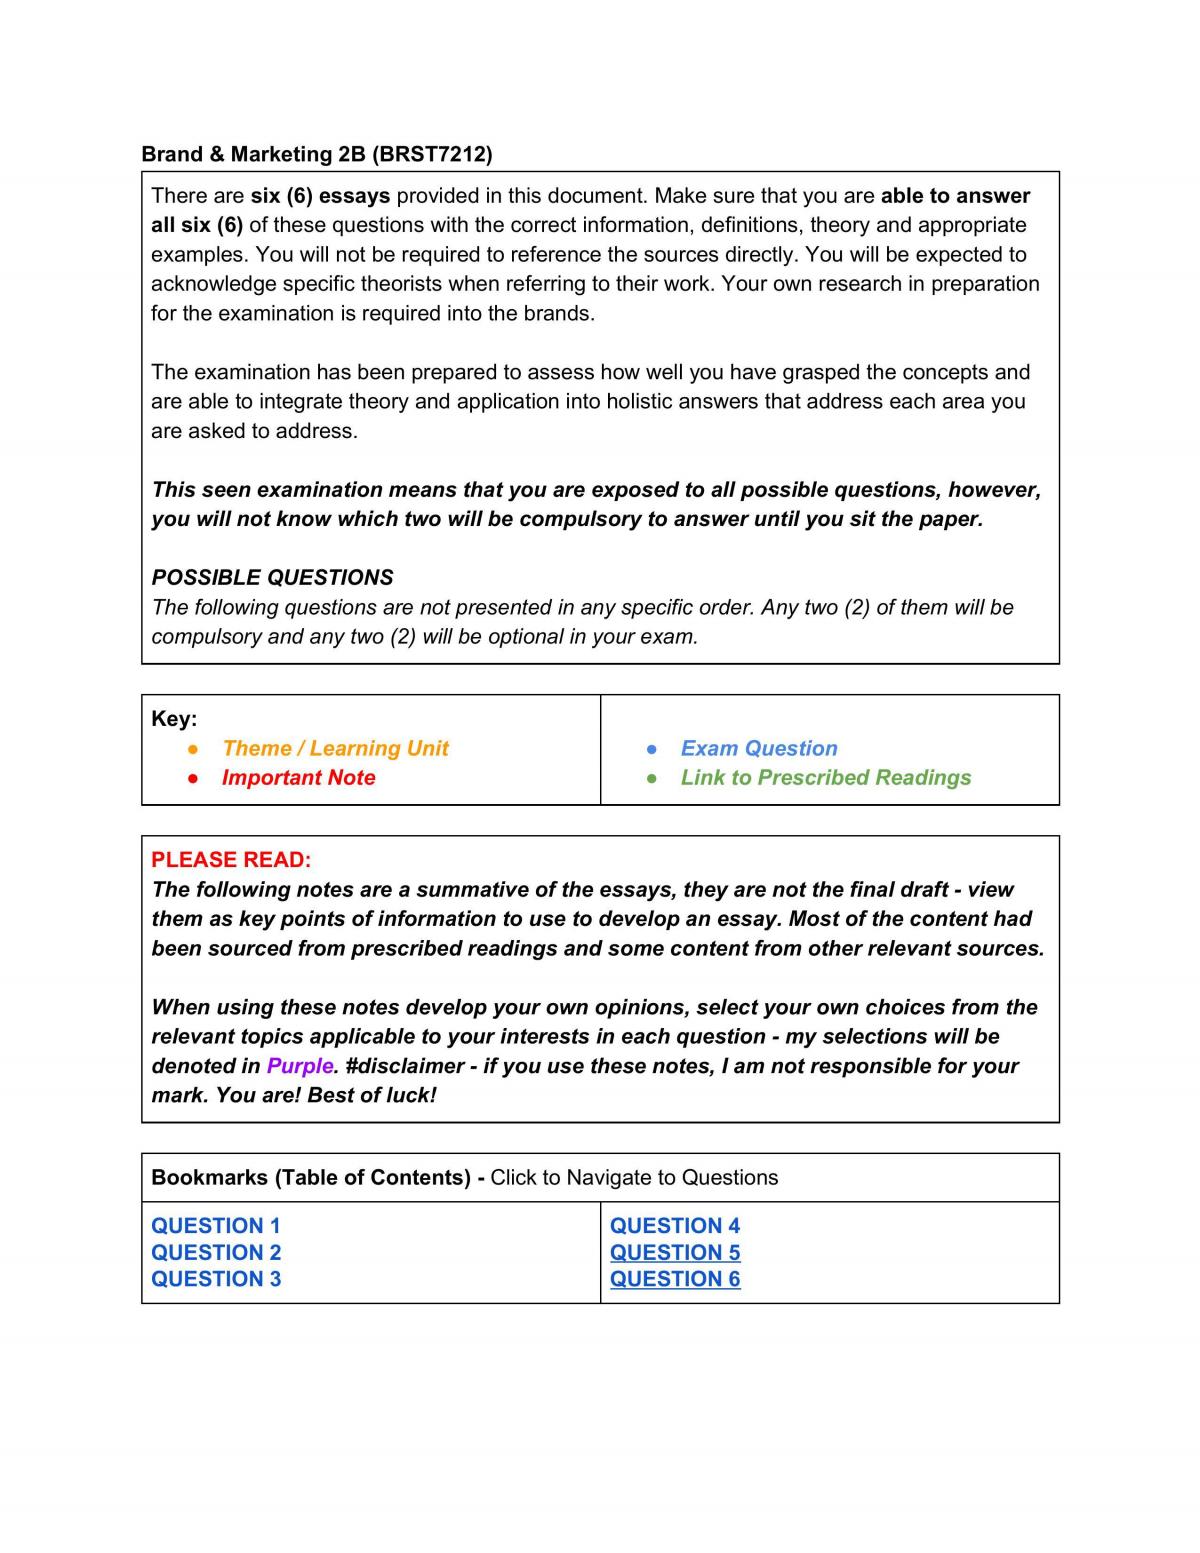 Brand & marketing 2B Full Exam notes - Page 1